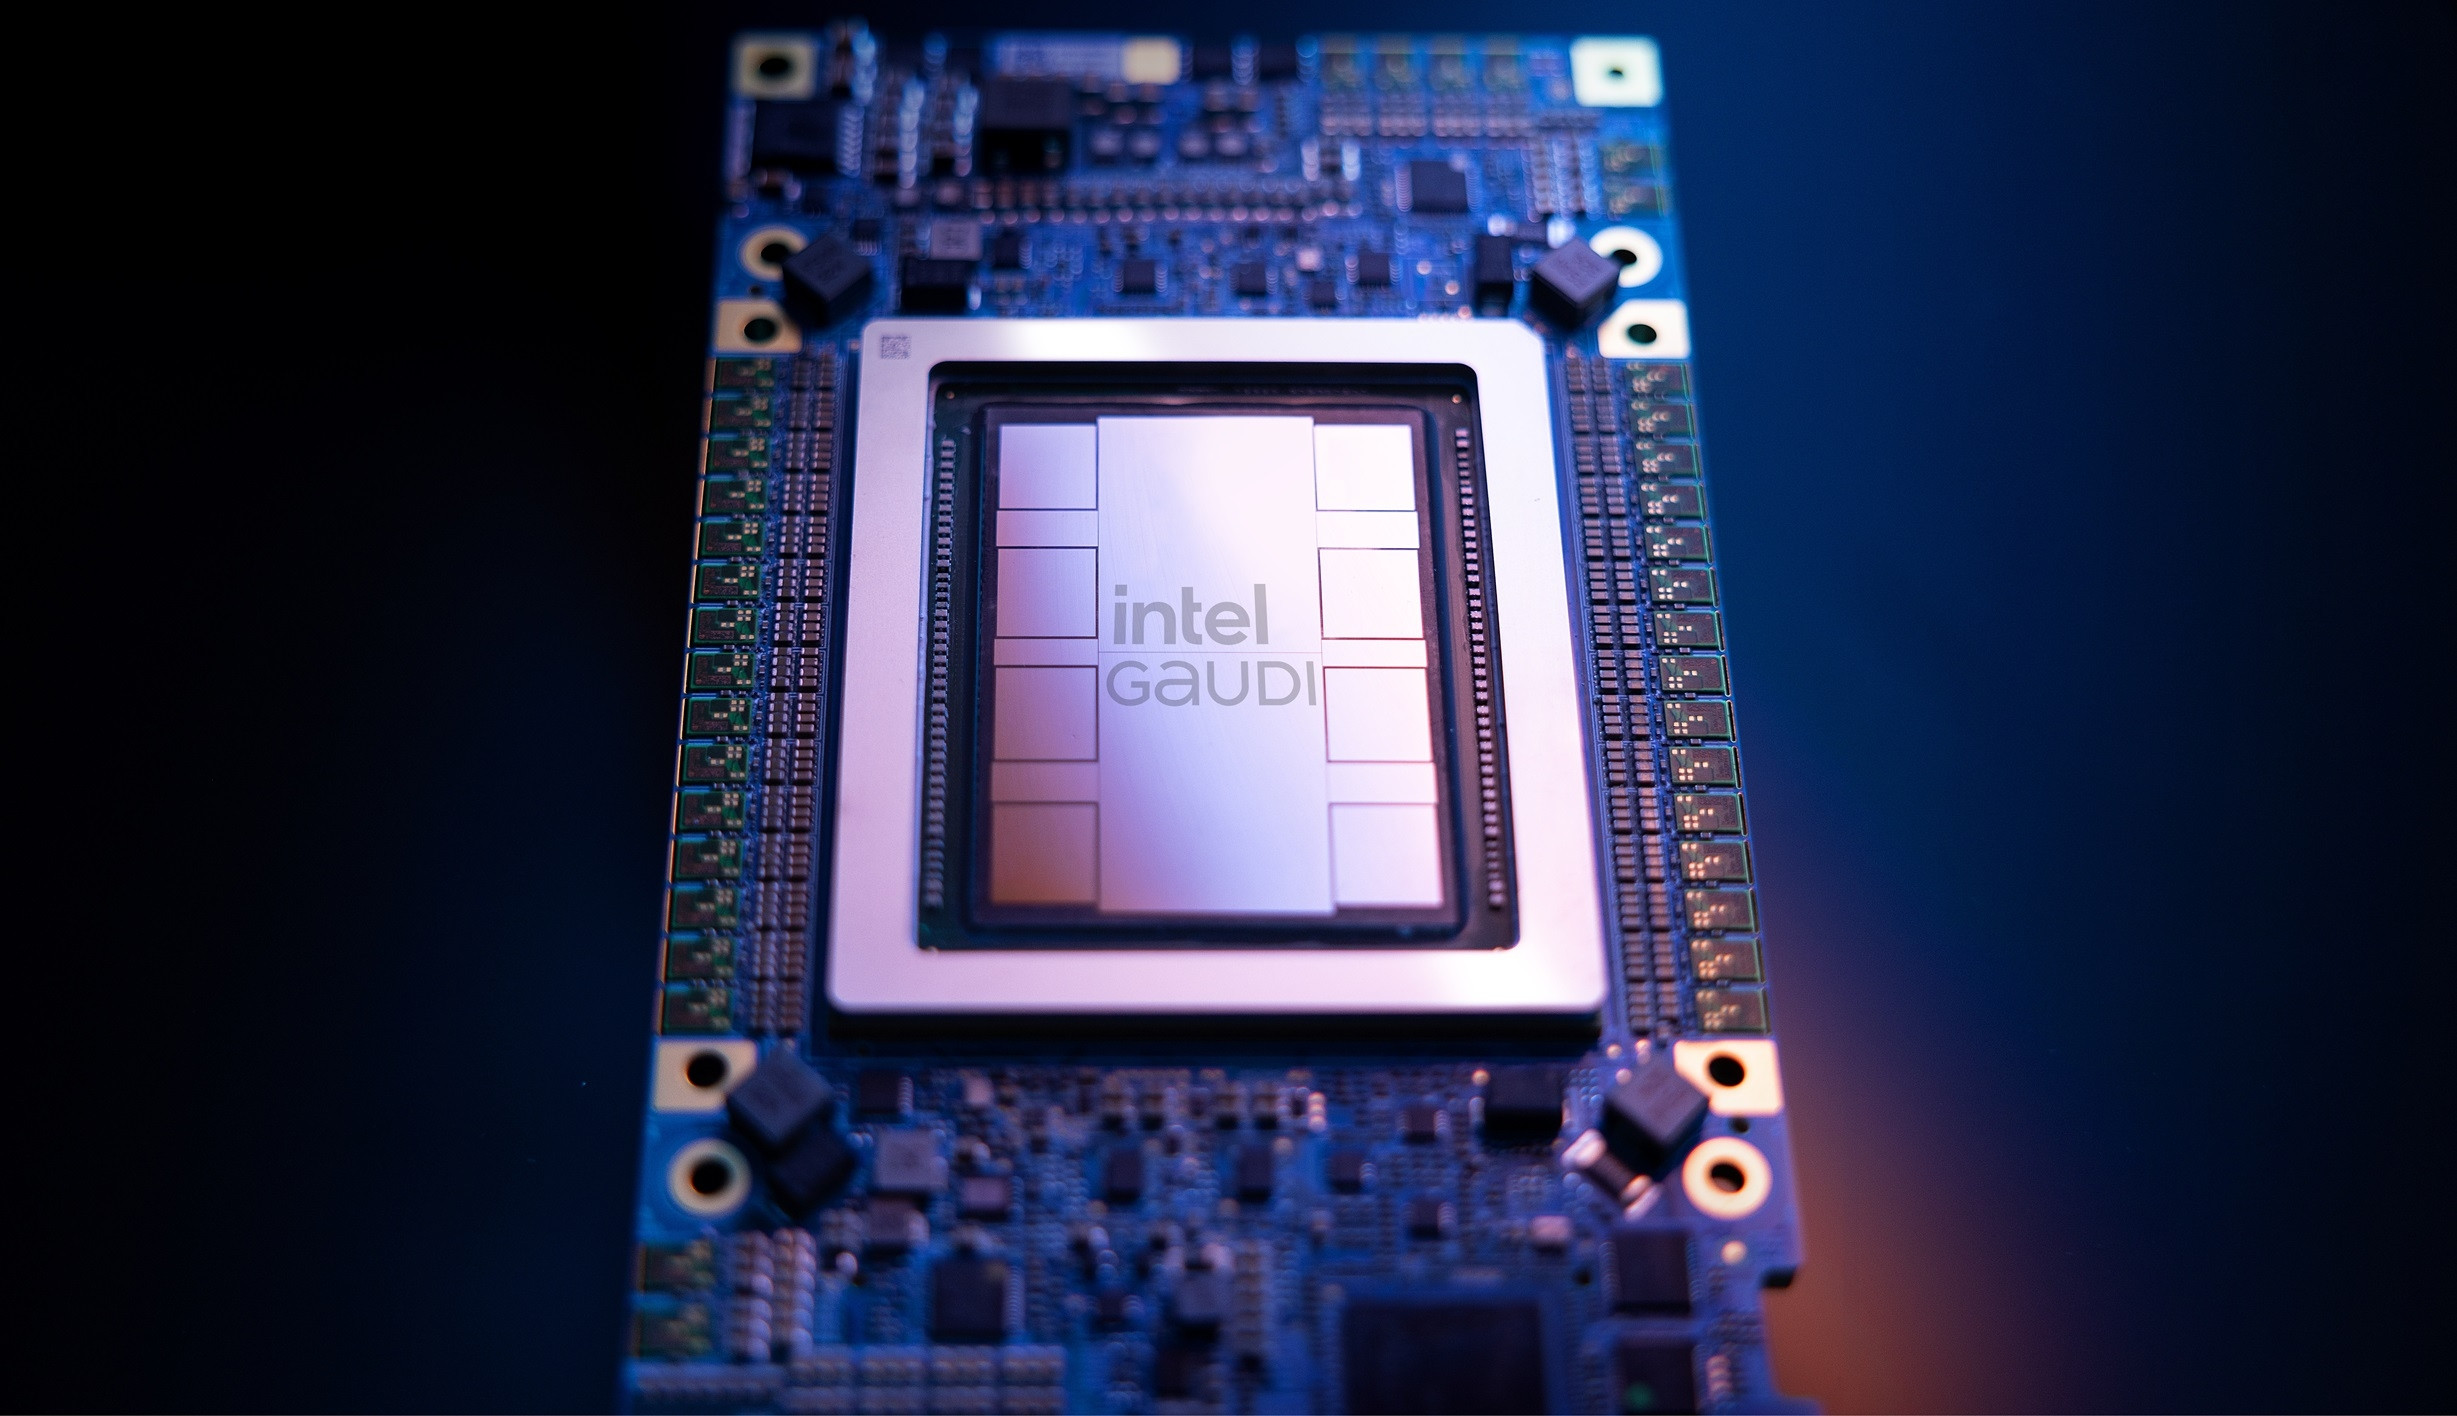 Intel Gaudi 3